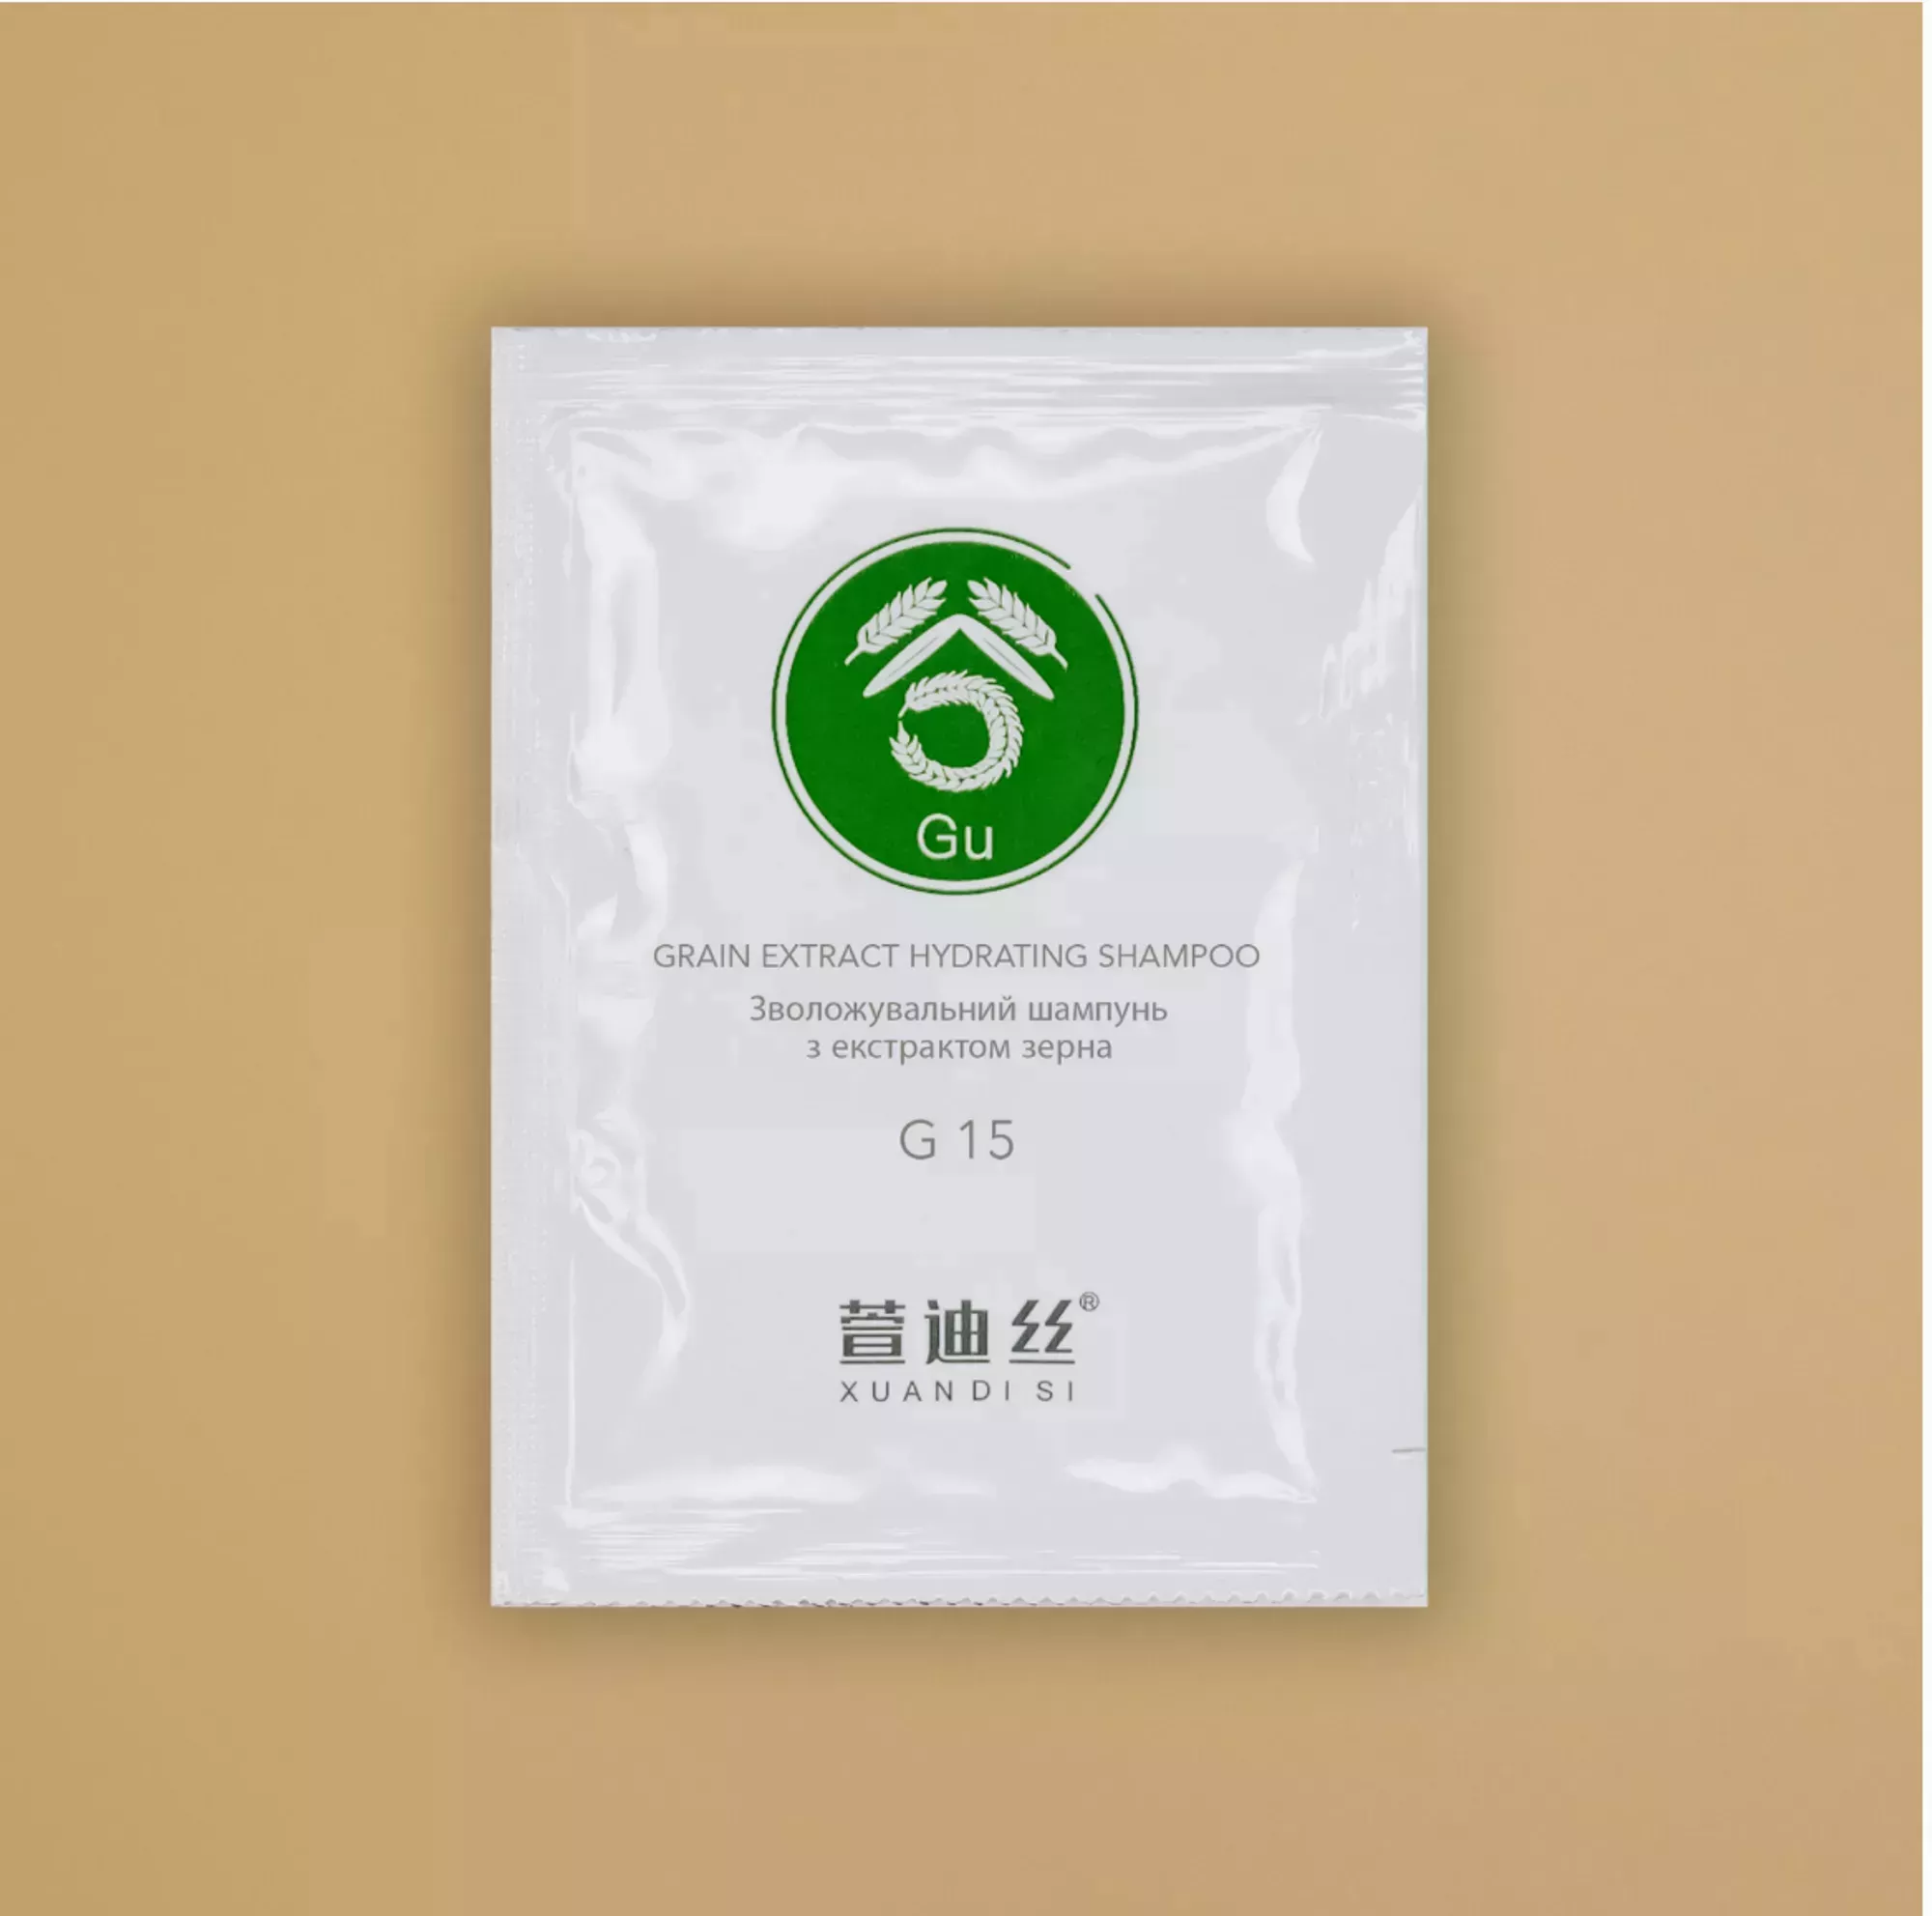 Тестер зволожуючого шампуню XUANDI SI Grain Extract Hydrating Shampoo з екстрактом зерна, 15 мл